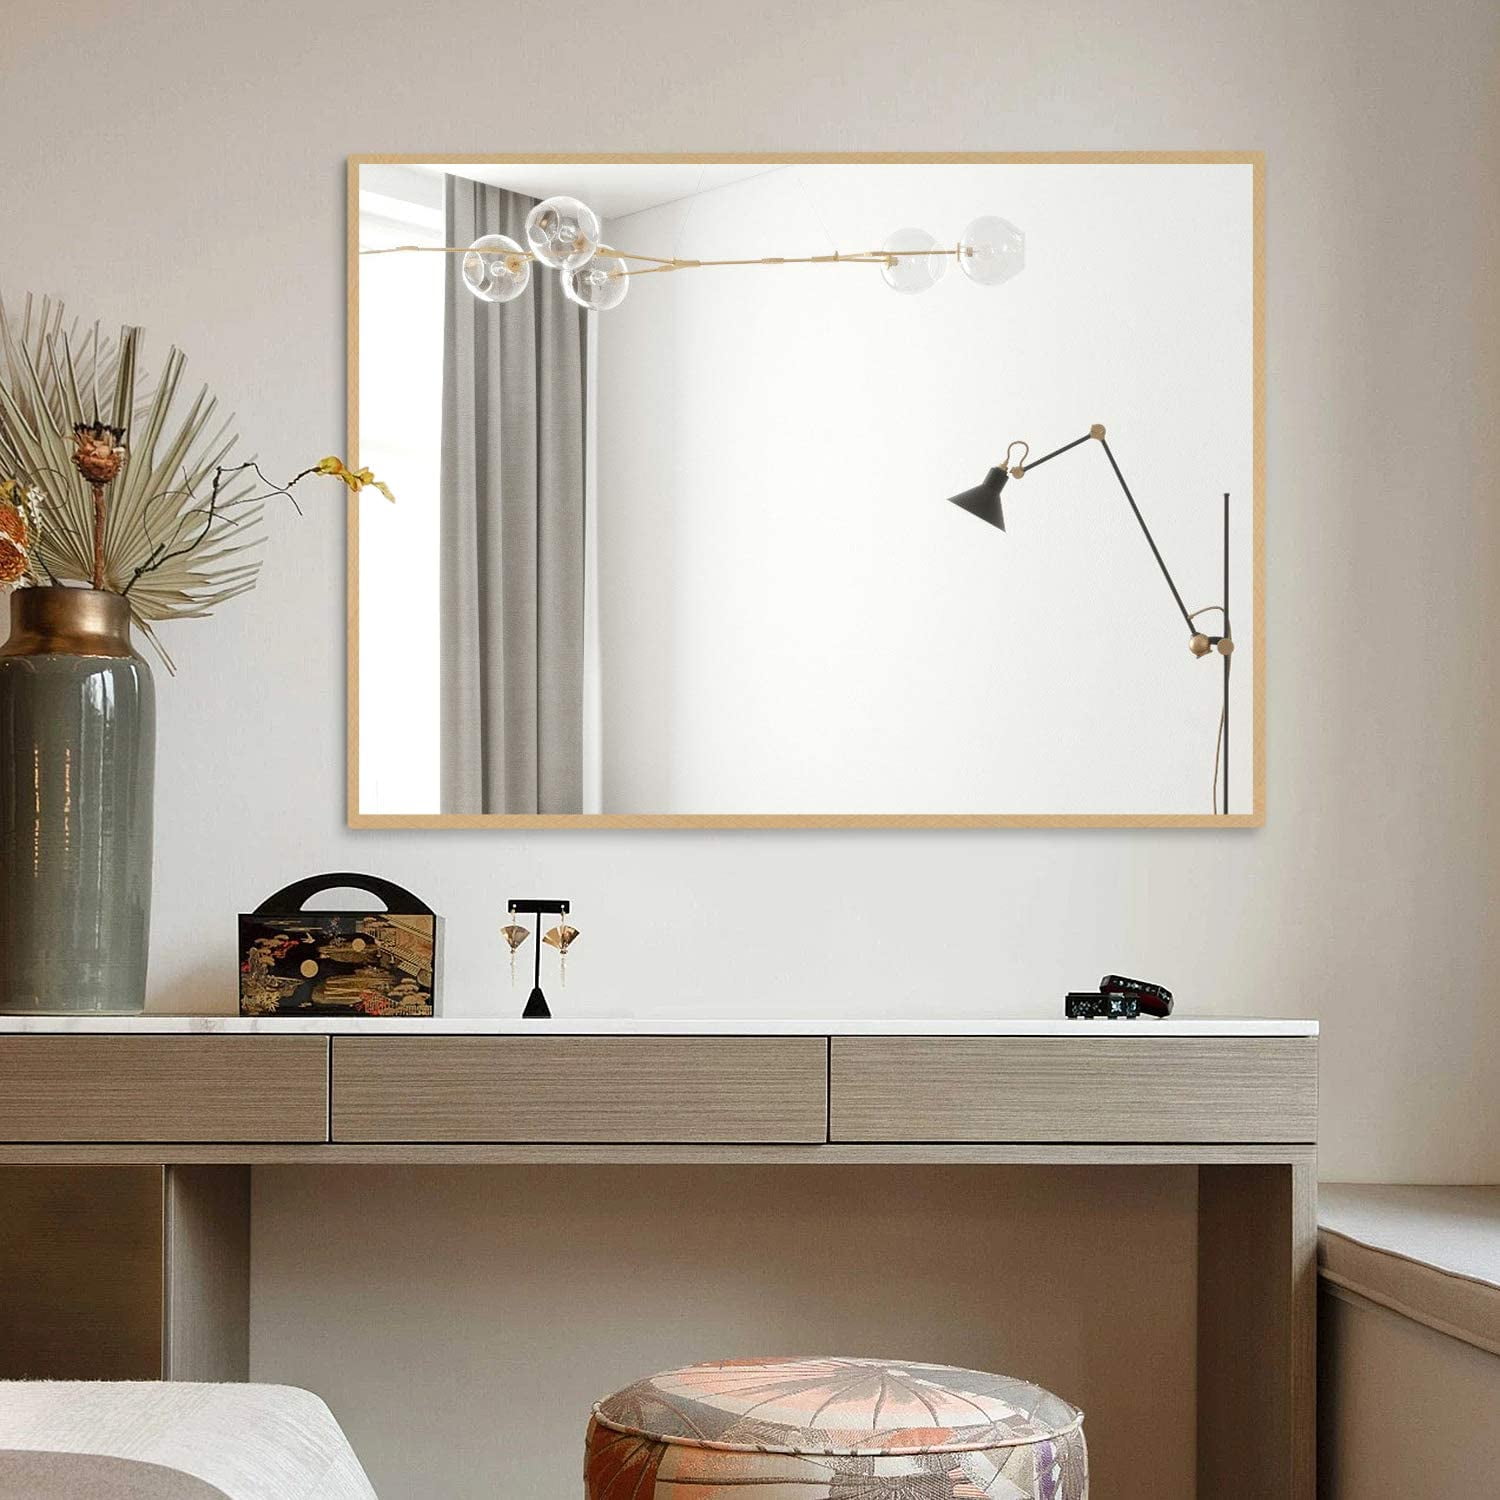 Bathroom Mirror Ideas On Wall